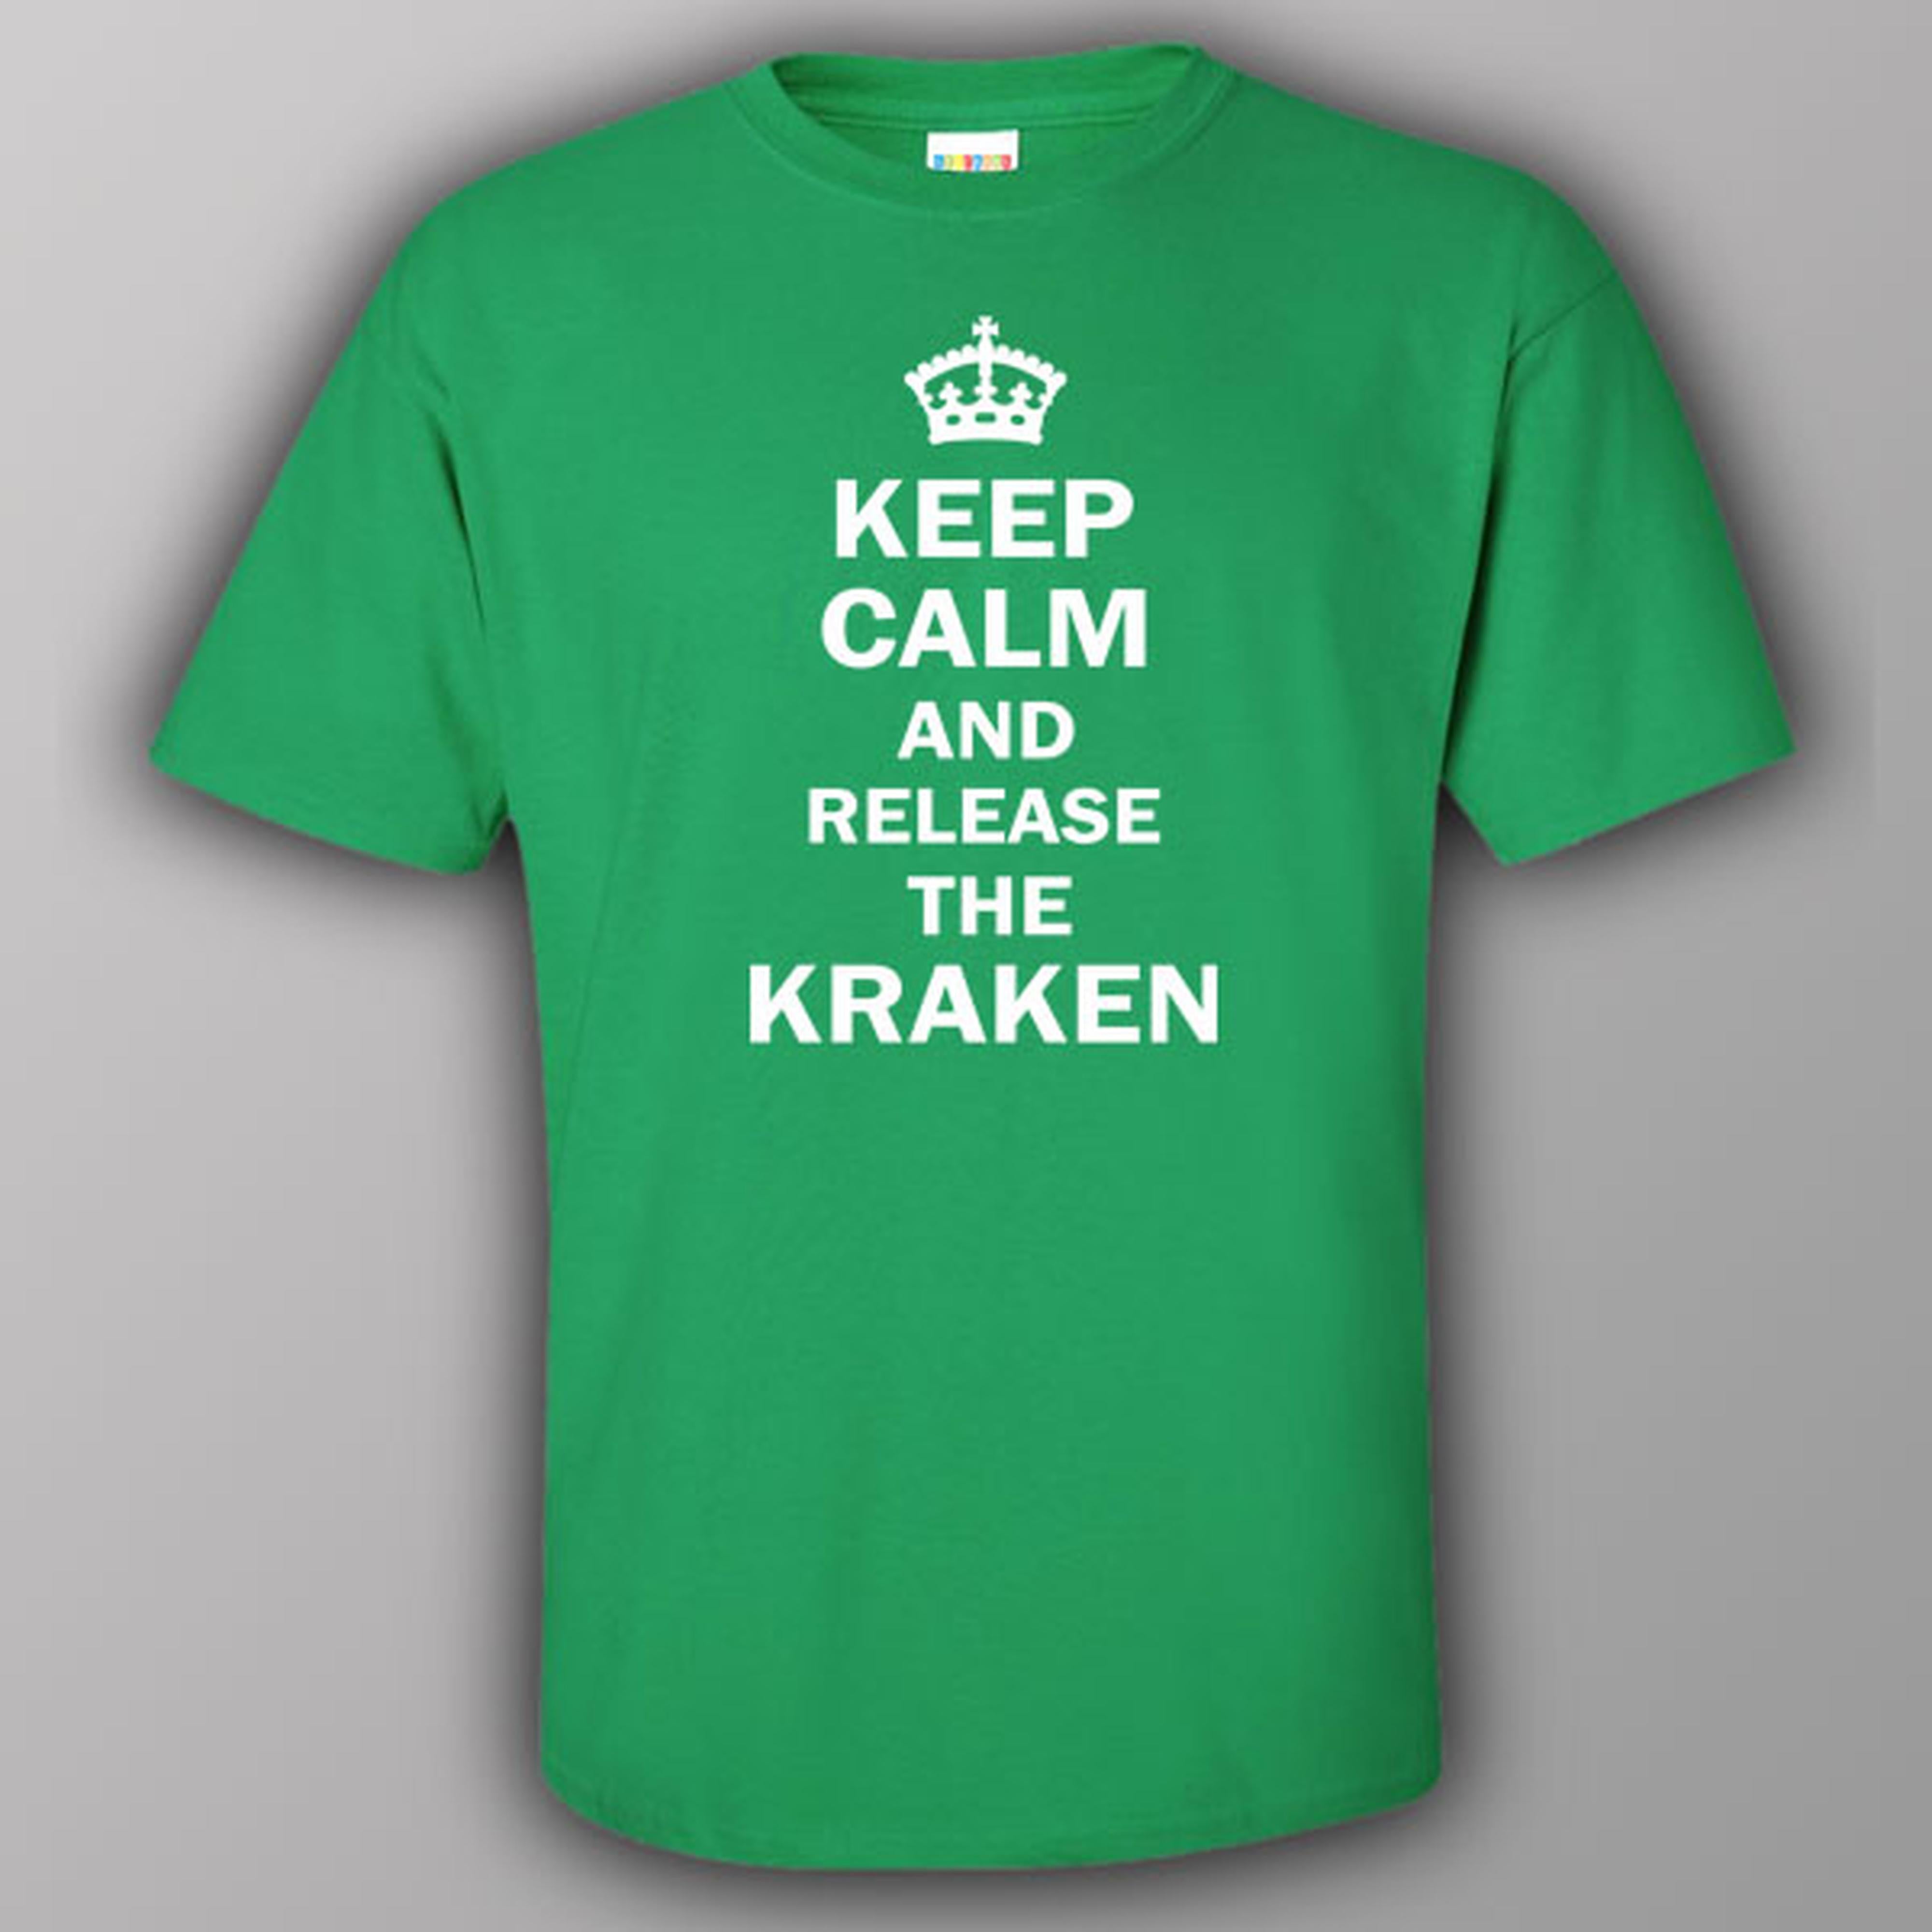 Keep calm and release the Kraken - T-shirt